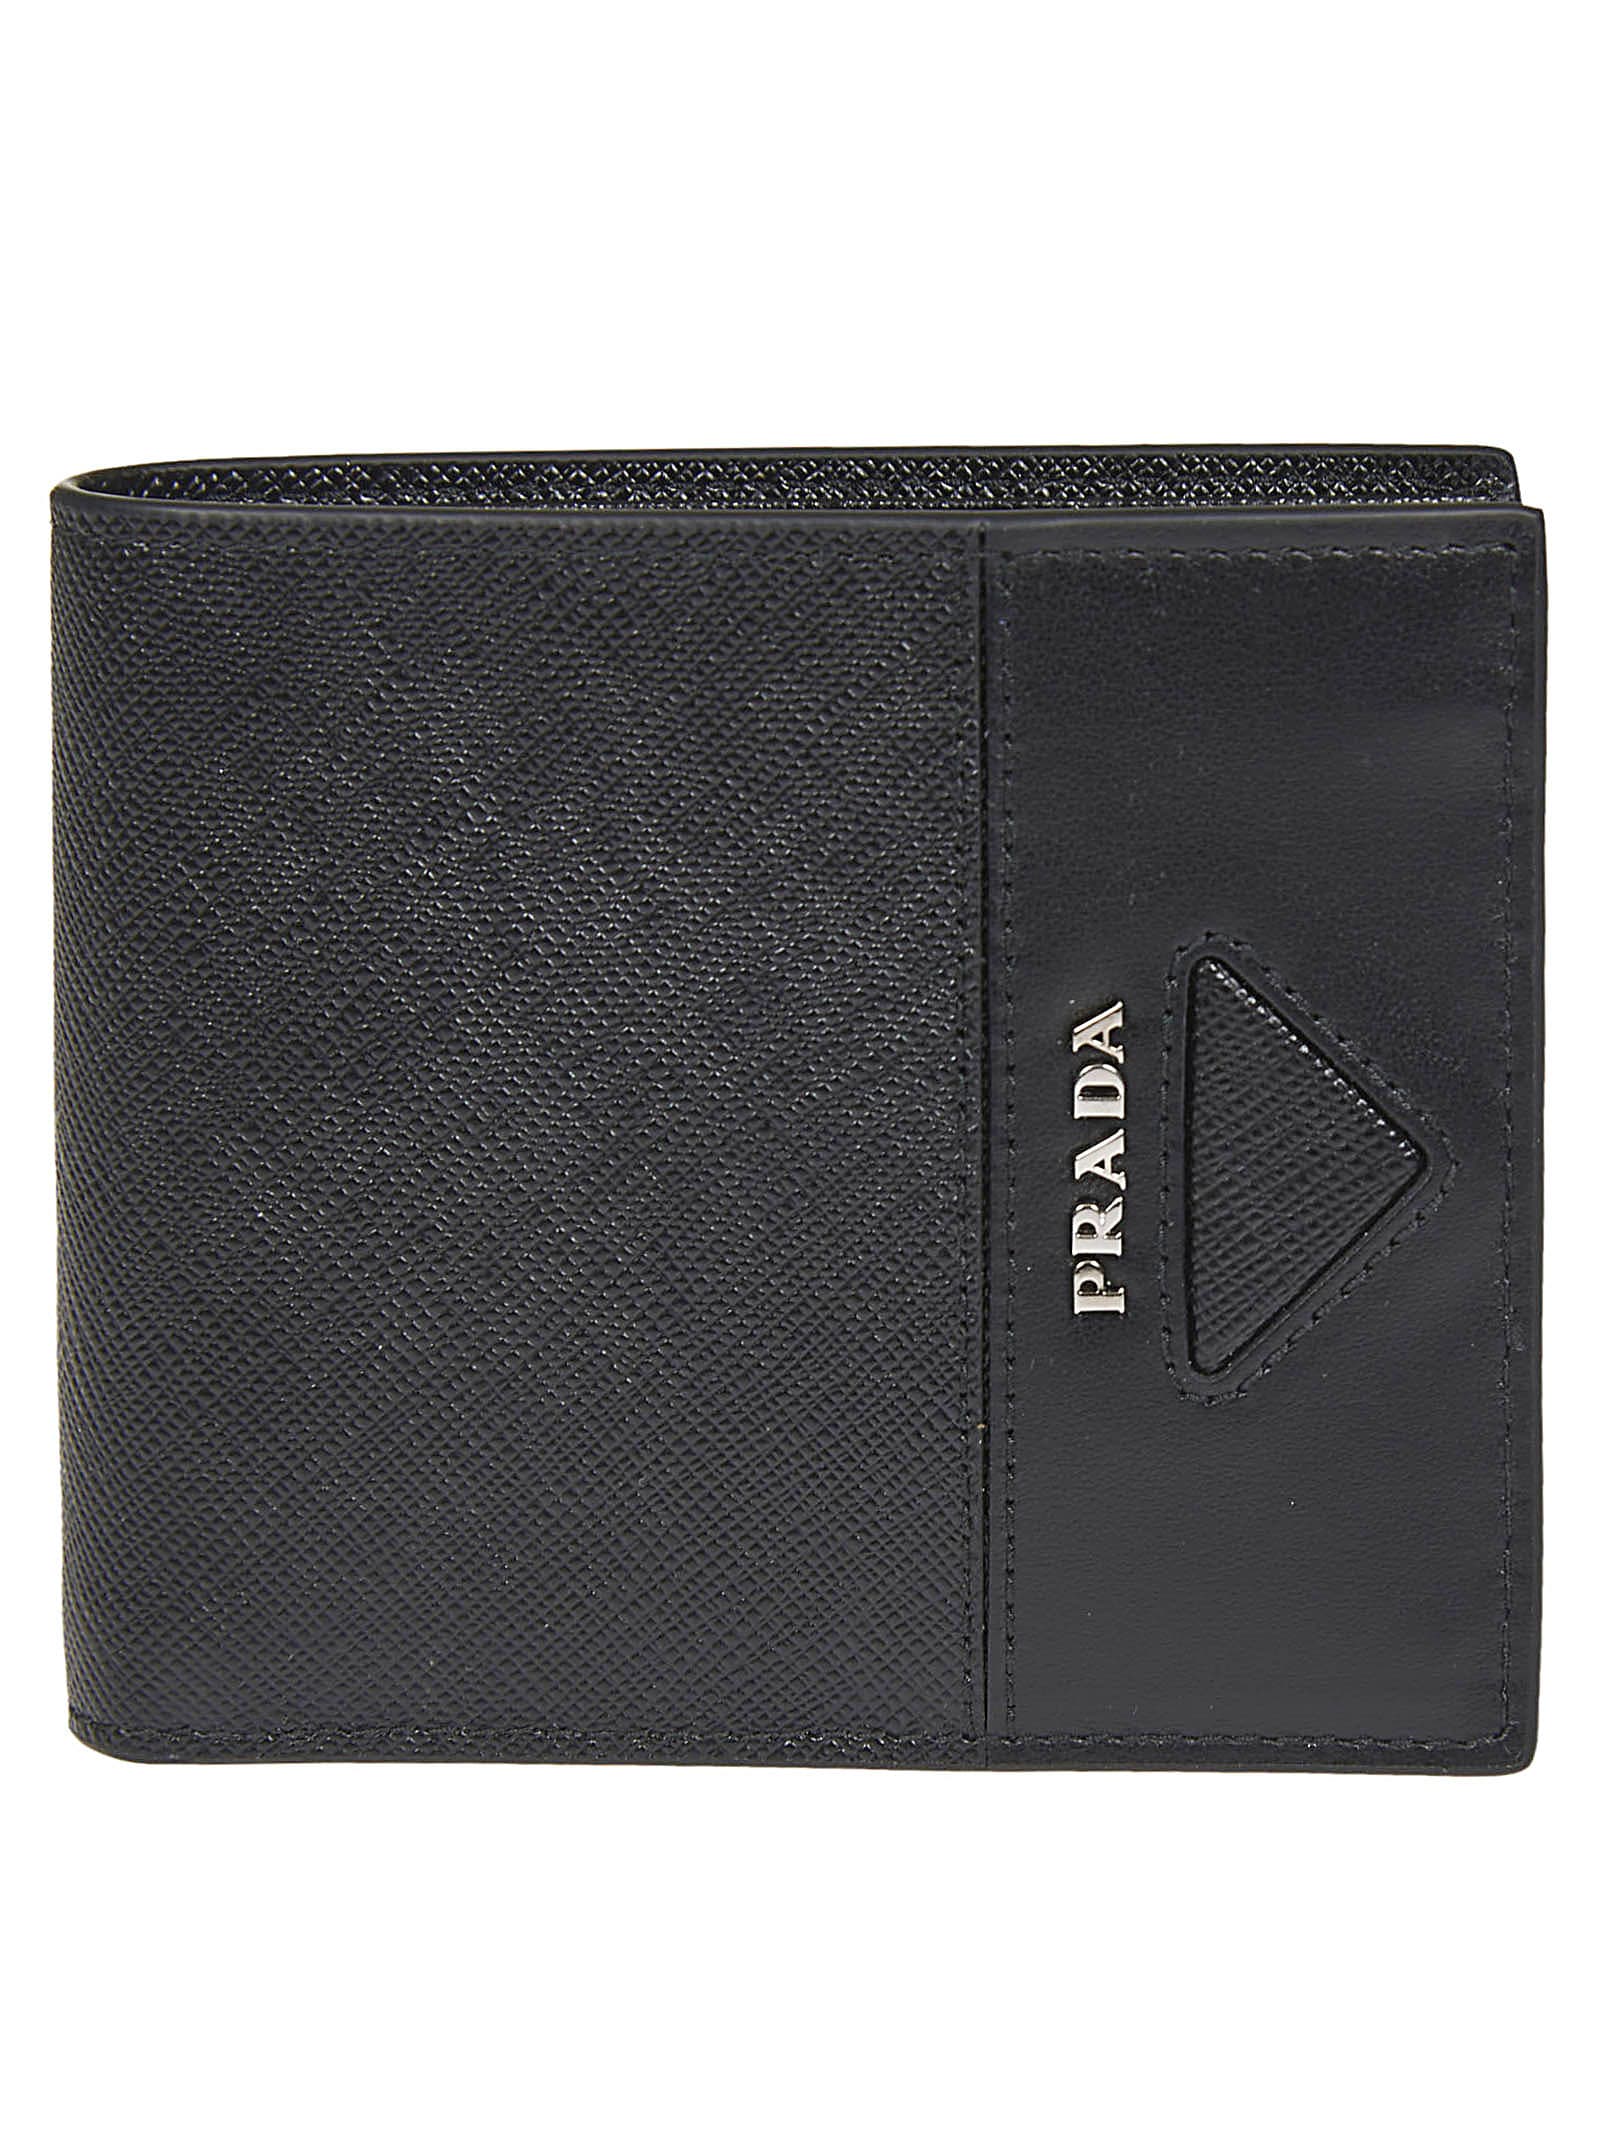 Prada Logo Billfold Wallet In Black